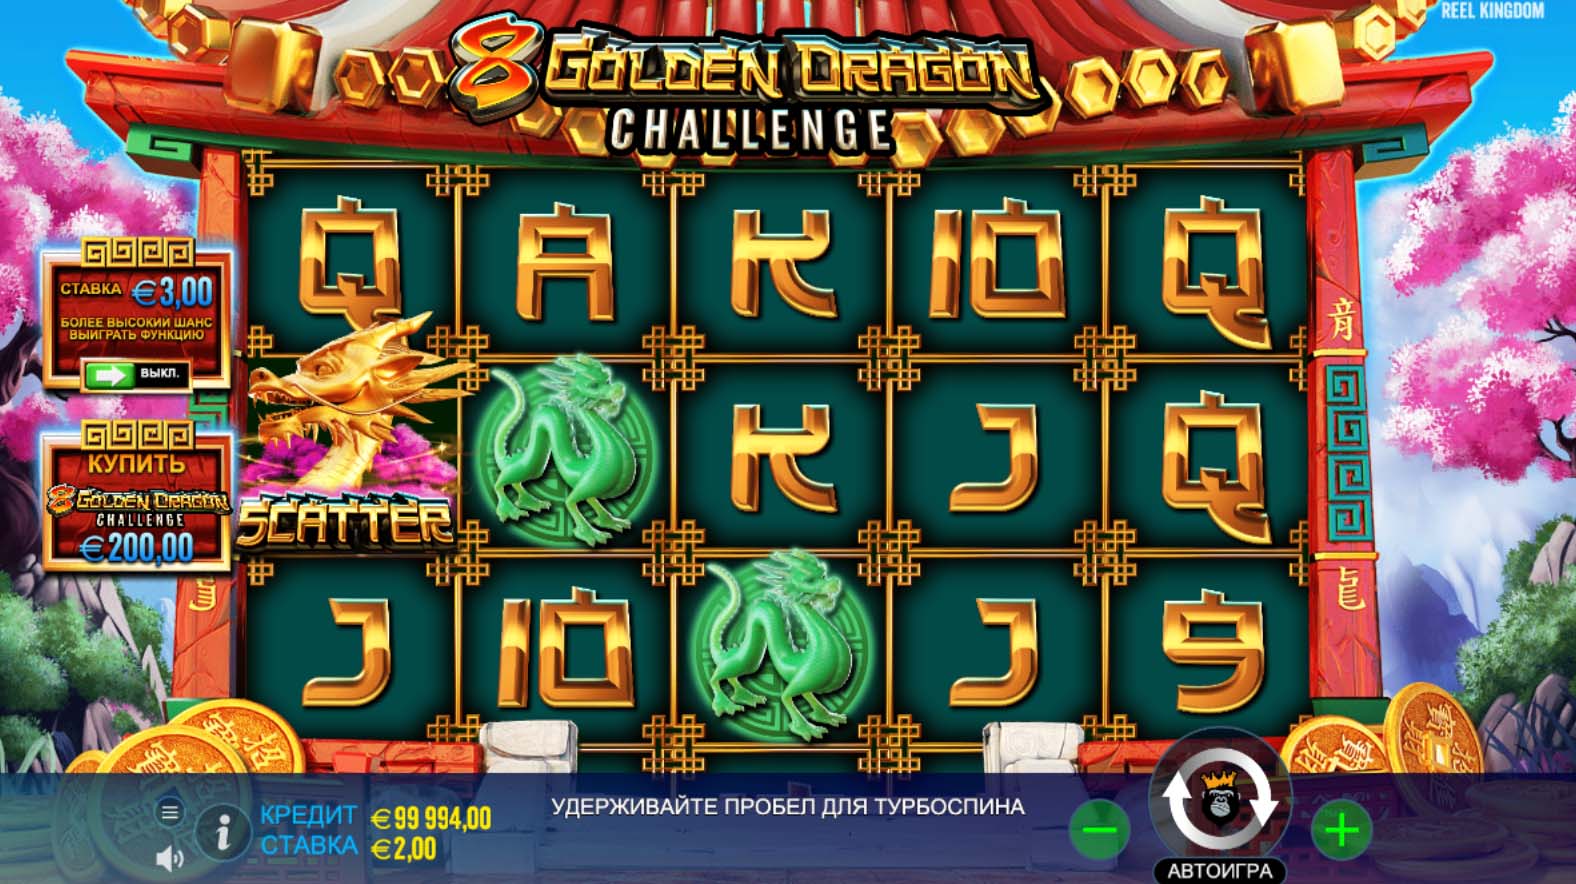 8 Golden Dragon Challenge 1